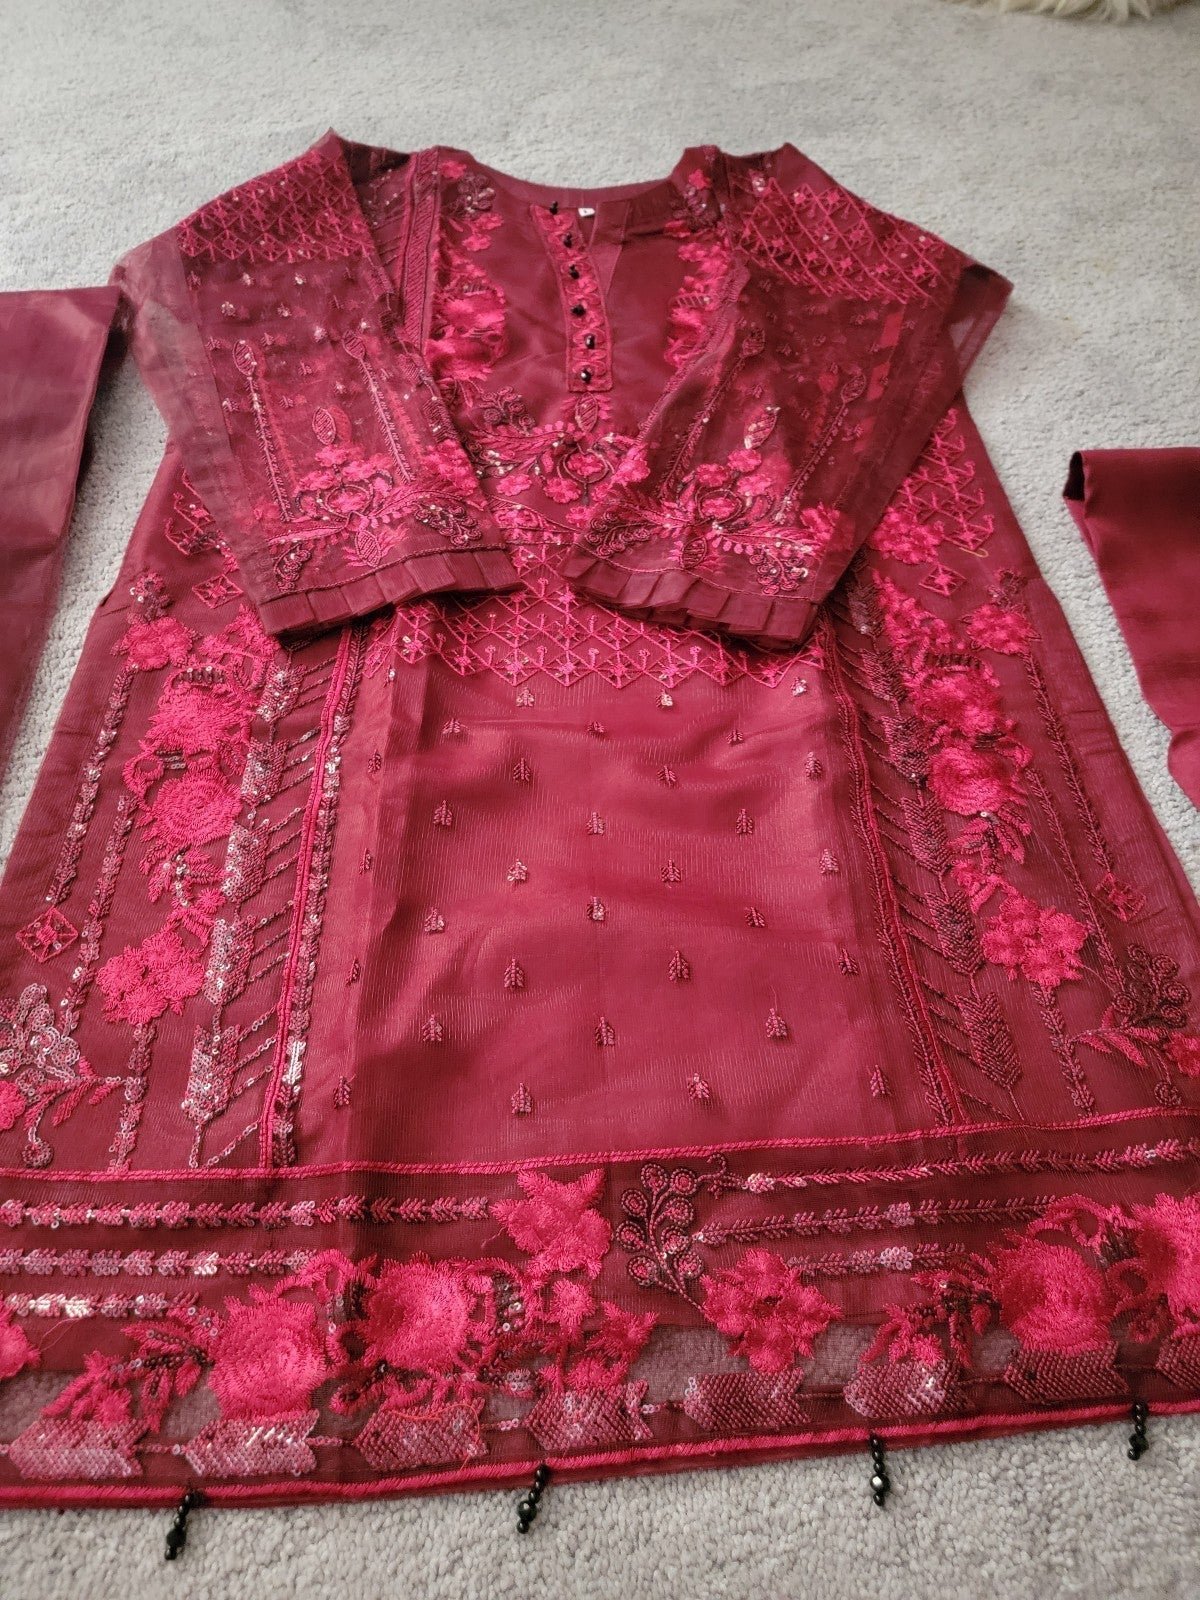 Indian/Pakistani dress 9wYK5VG5t